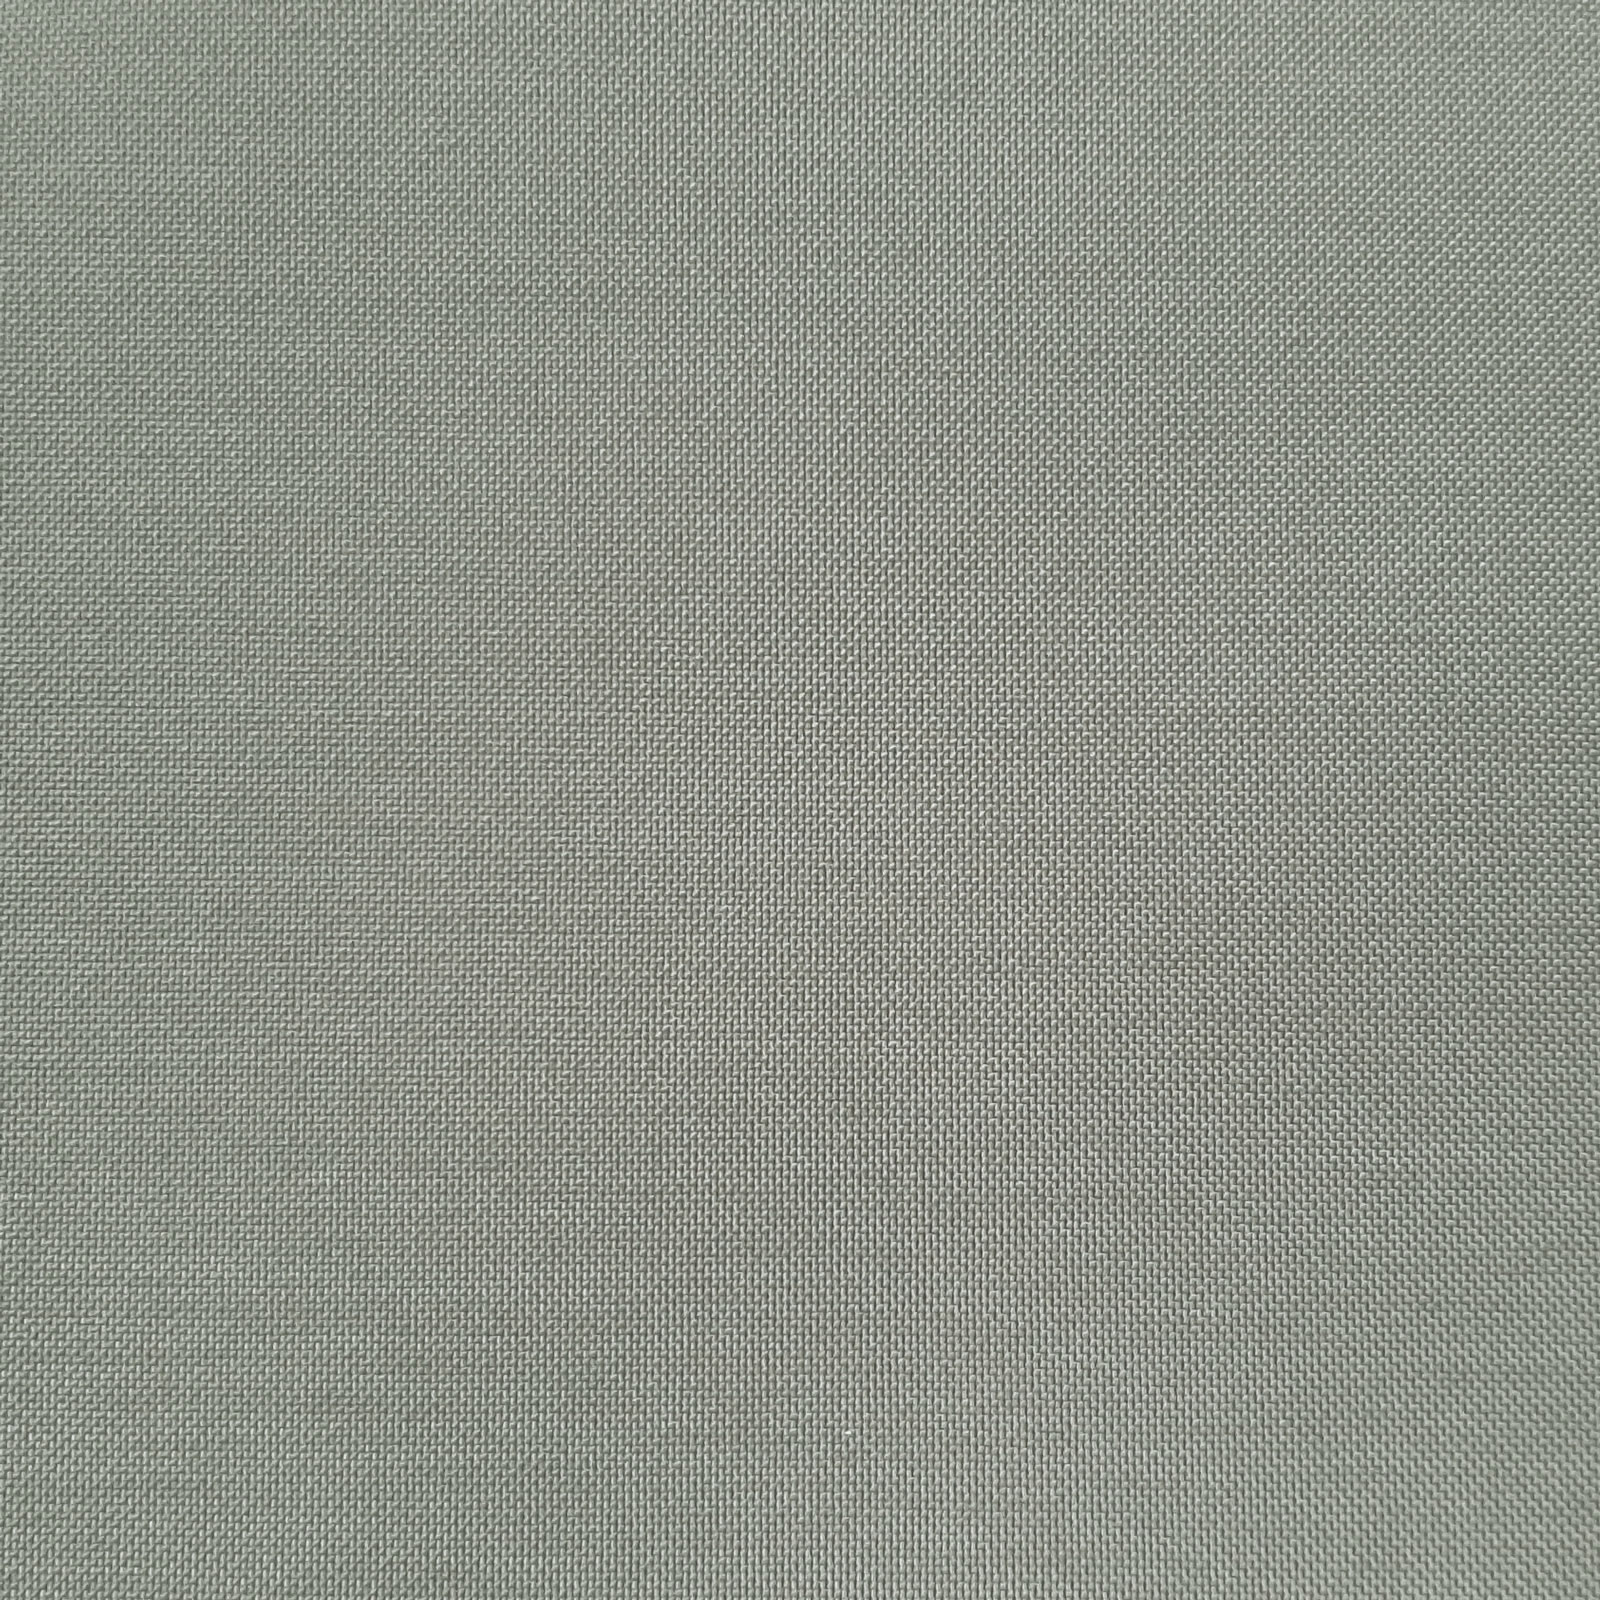 Zinos - robusto tessuto Cordura® - Chiaro grigio